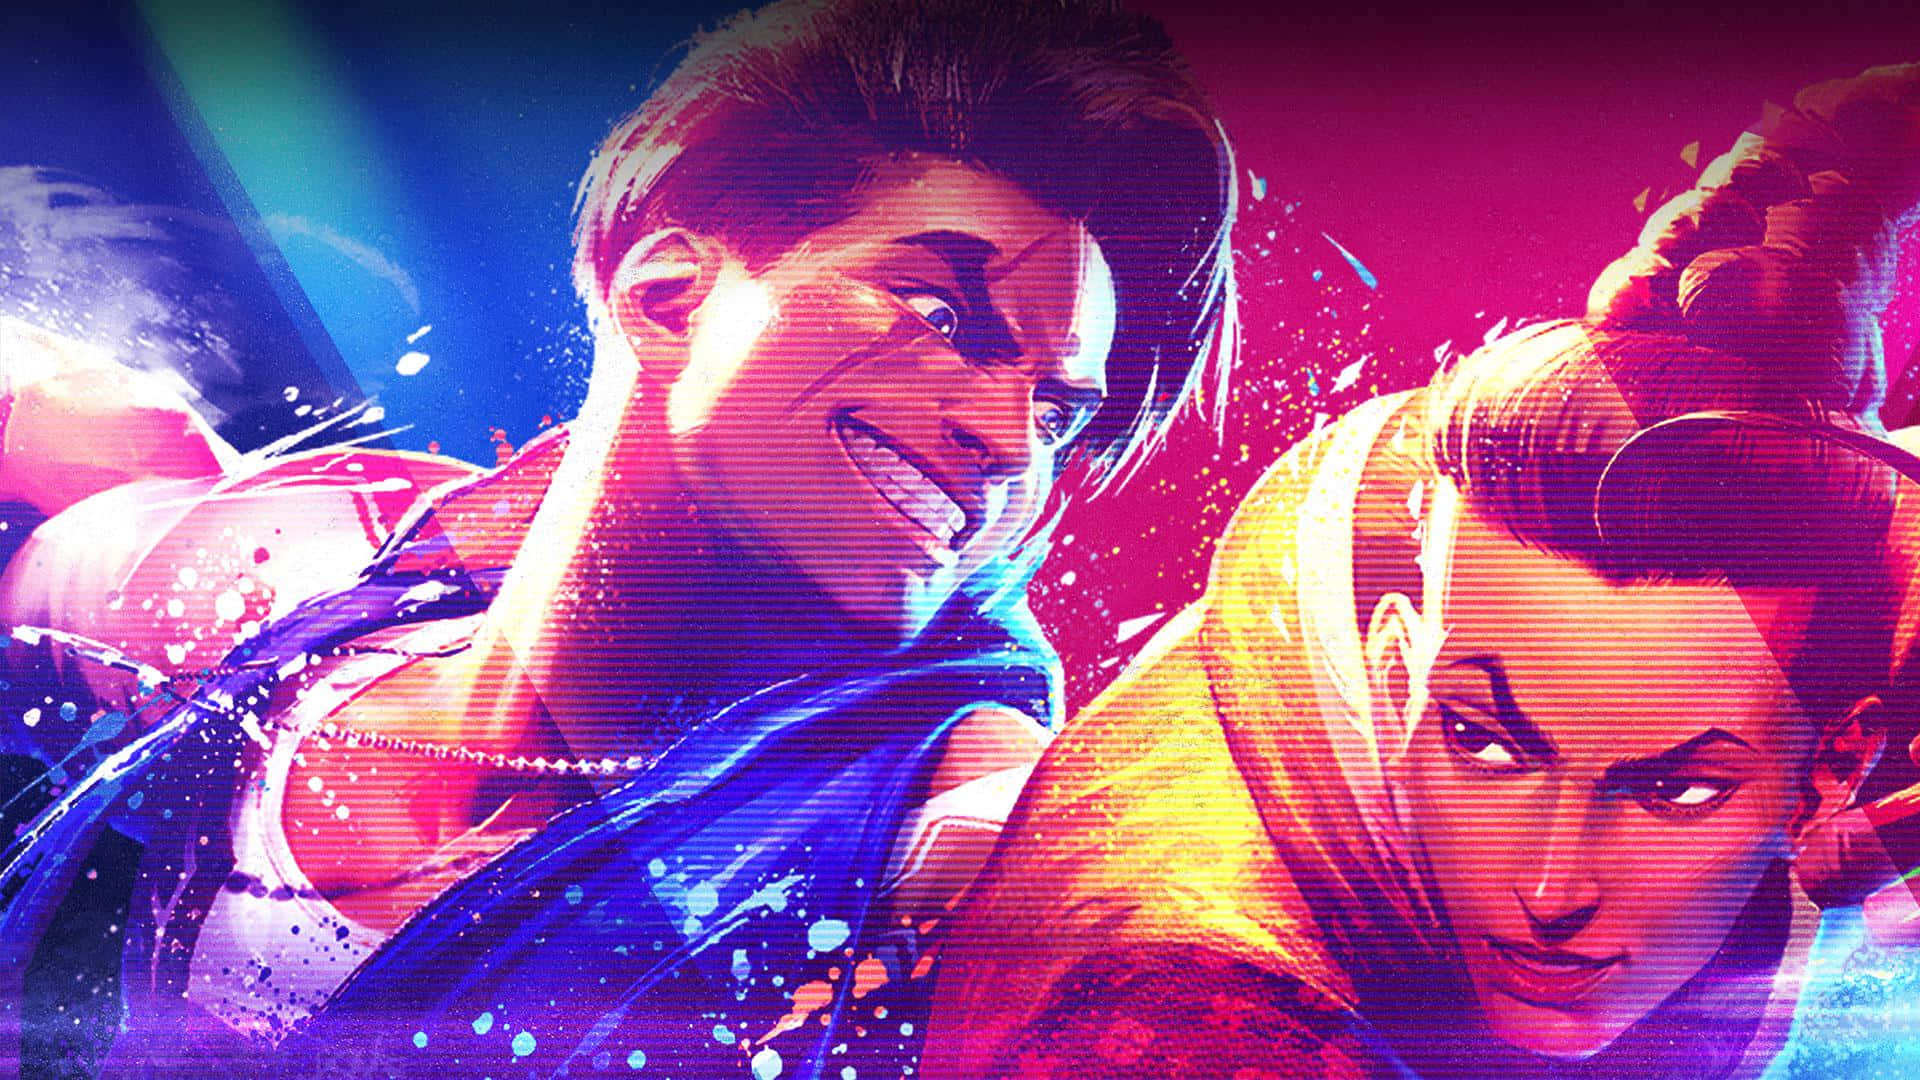 Street Fighter6 Vibrant Duel Artwork Wallpaper